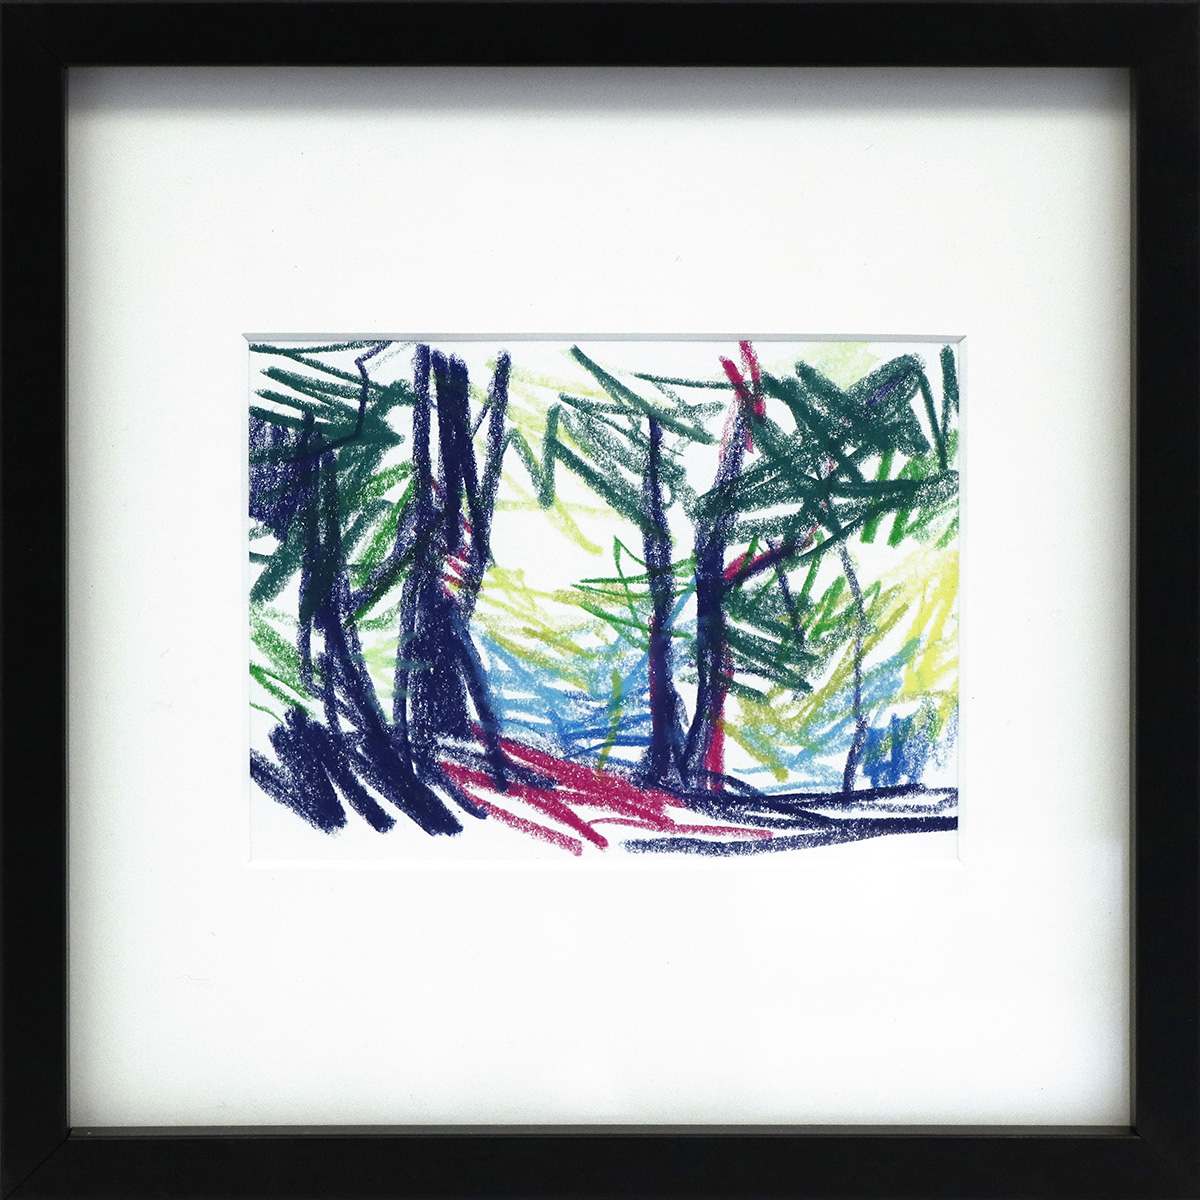 Buchen, 20209,5 x 13 cm in 20 x 20 cmCrayon on paper; framed